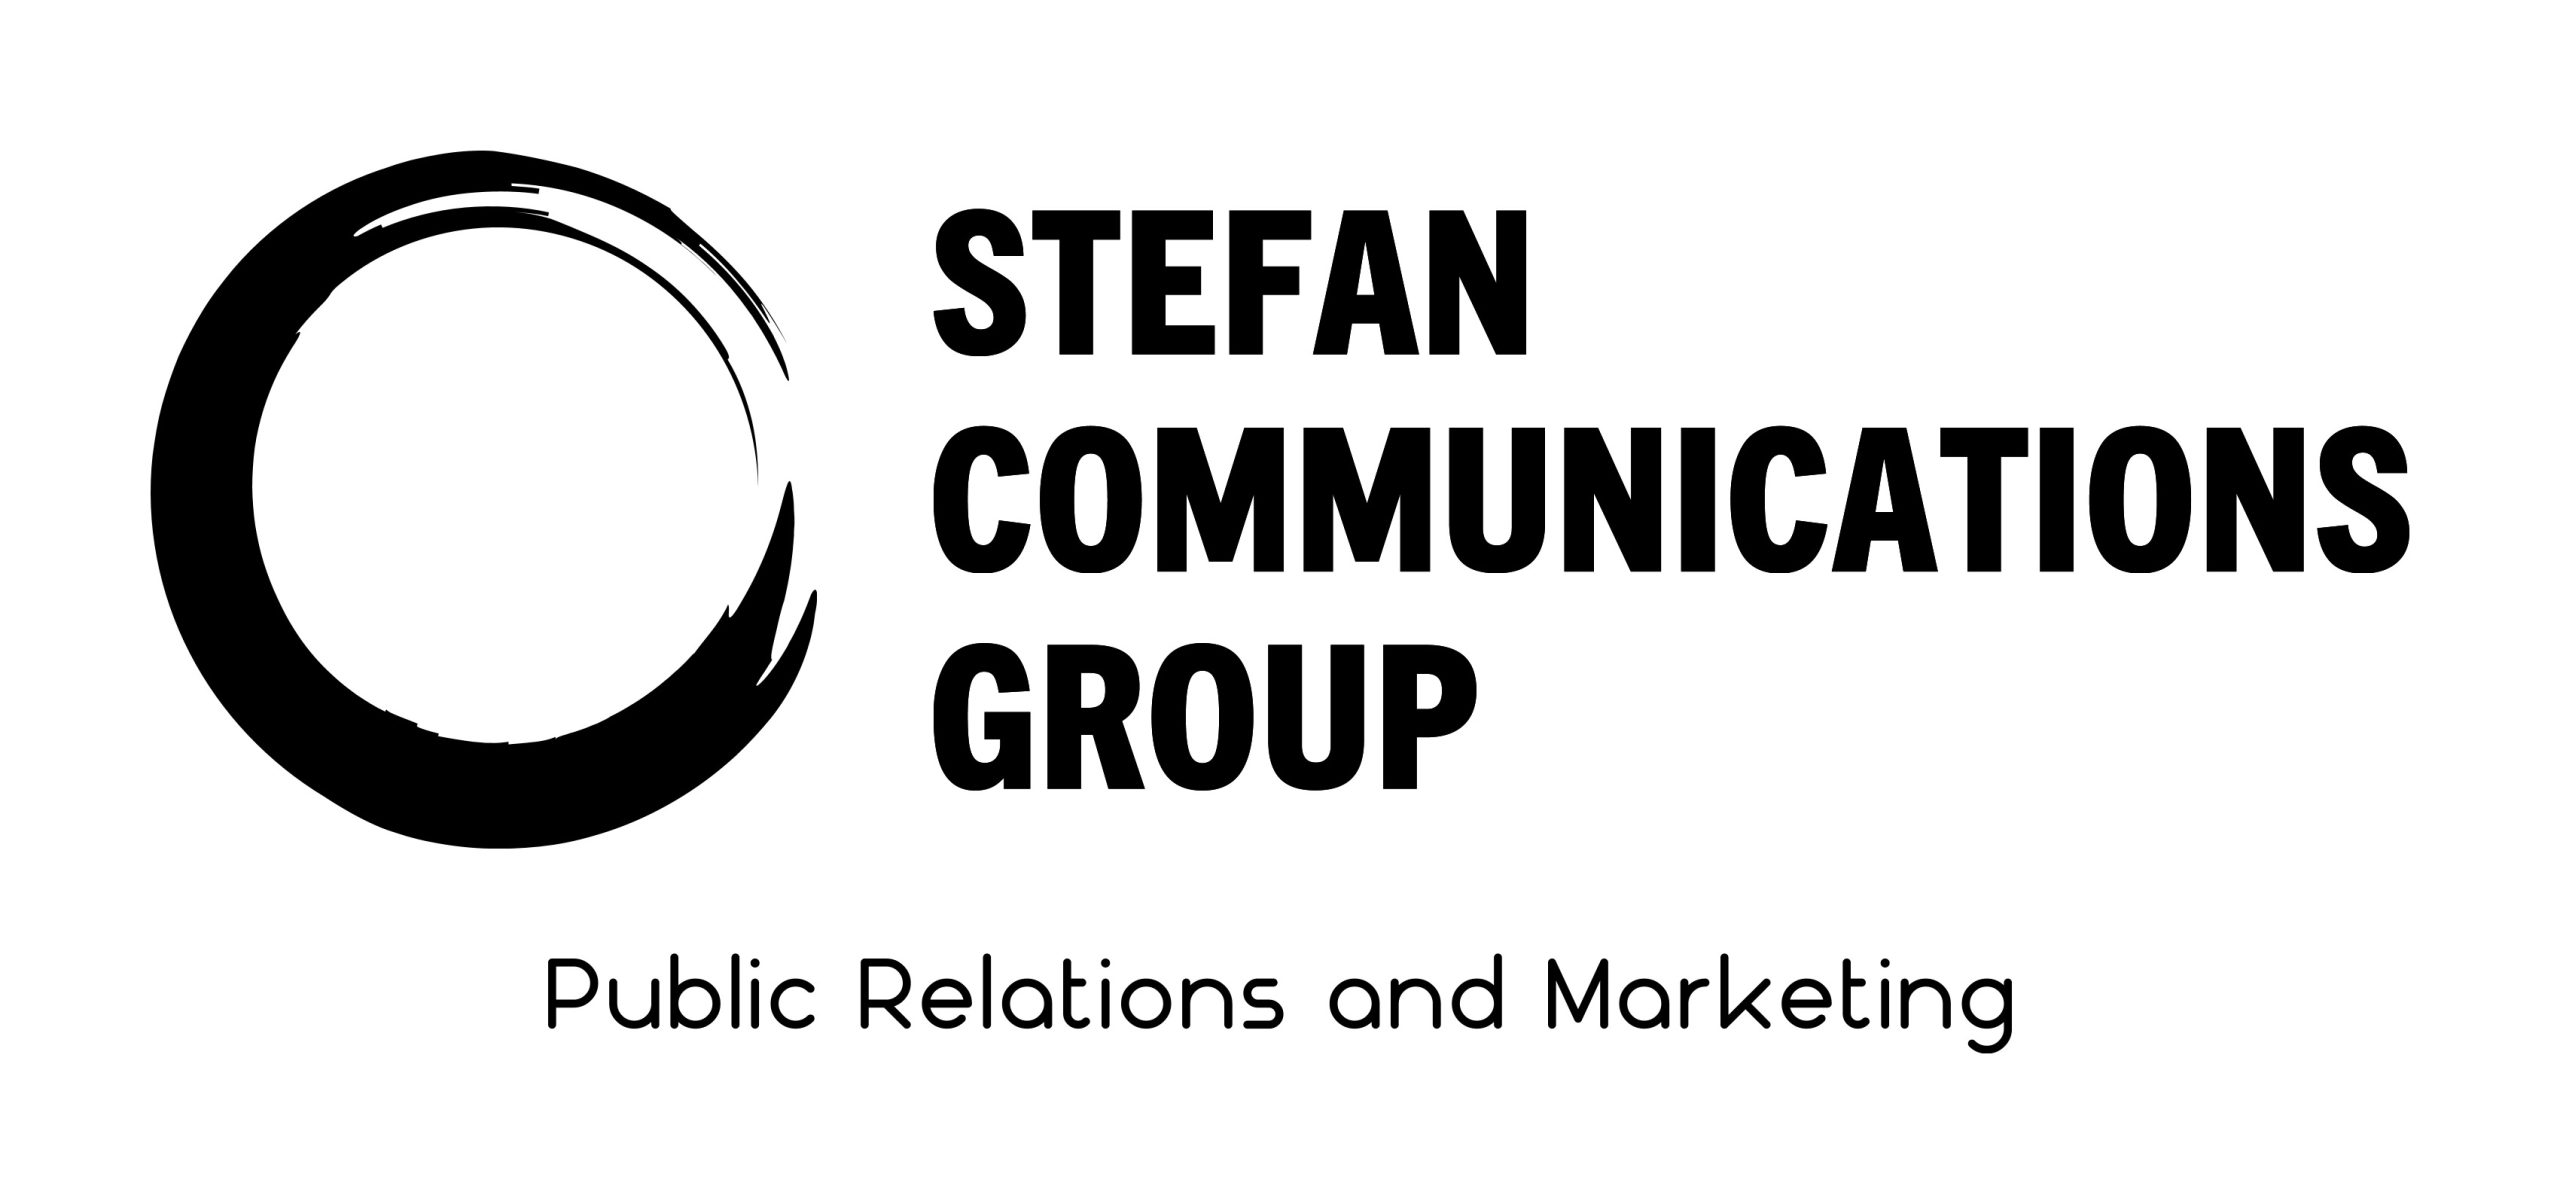 STEFAN-COMMUNICATION-GROUP